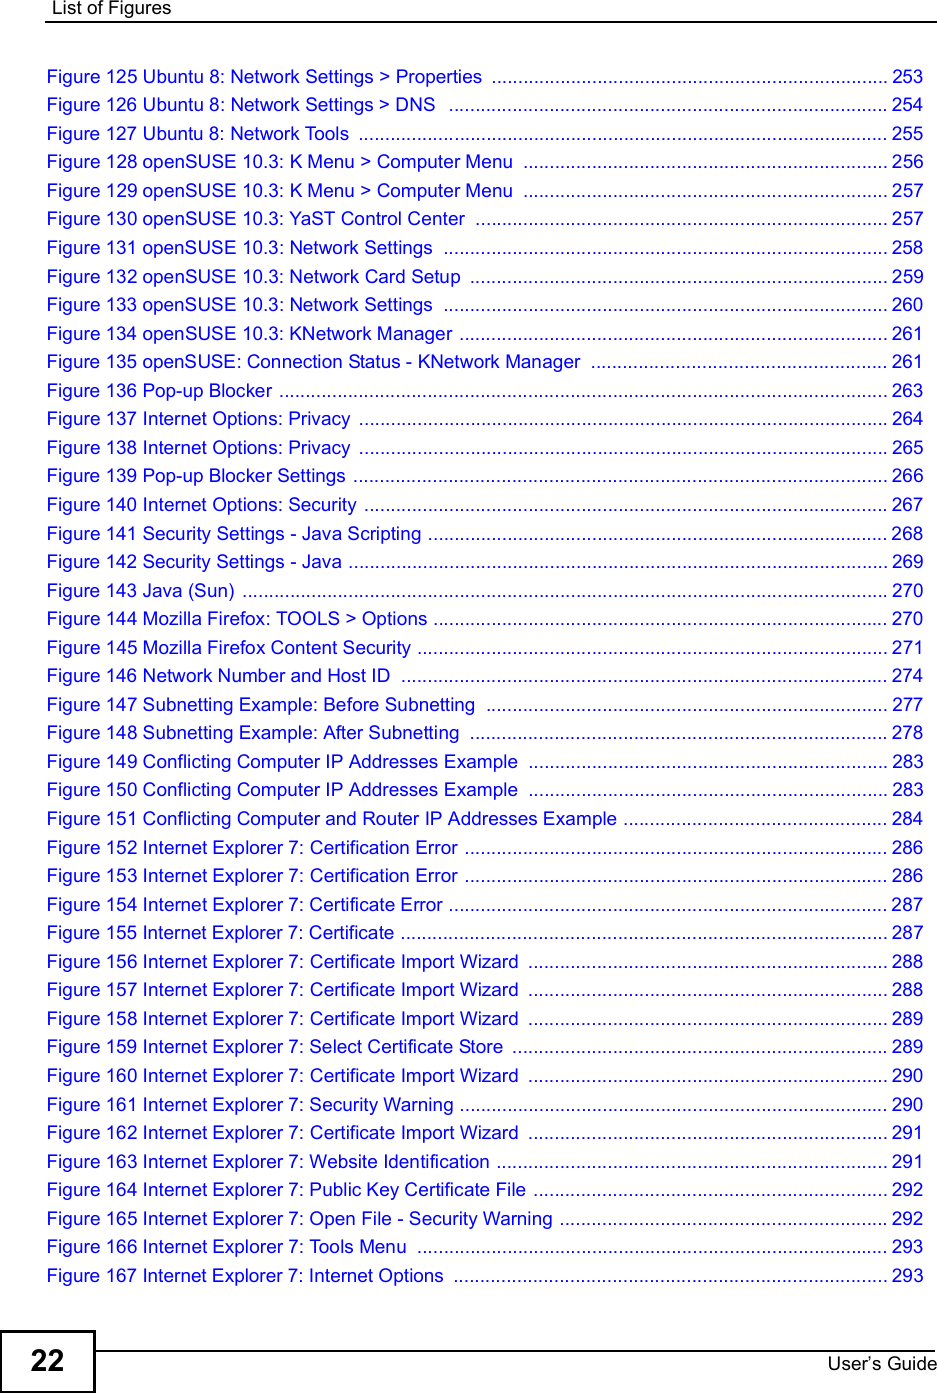 List of FiguresUser s Guide22Figure 125 Ubuntu 8: Network Settings &gt; Properties ...........................................................................253Figure 126 Ubuntu 8: Network Settings &gt; DNS  ...................................................................................254Figure 127 Ubuntu 8: Network Tools ....................................................................................................255Figure 128 openSUSE 10.3: K Menu &gt; Computer Menu .....................................................................256Figure 129 openSUSE 10.3: K Menu &gt; Computer Menu .....................................................................257Figure 130 openSUSE 10.3: YaST Control Center ..............................................................................257Figure 131 openSUSE 10.3: Network Settings ....................................................................................258Figure 132 openSUSE 10.3: Network Card Setup ...............................................................................259Figure 133 openSUSE 10.3: Network Settings ....................................................................................260Figure 134 openSUSE 10.3: KNetwork Manager .................................................................................261Figure 135 openSUSE: Connection Status - KNetwork Manager ........................................................261Figure 136 Pop-up Blocker ...................................................................................................................263Figure 137 Internet Options: Privacy ....................................................................................................264Figure 138 Internet Options: Privacy ....................................................................................................265Figure 139 Pop-up Blocker Settings .....................................................................................................266Figure 140 Internet Options: Security ...................................................................................................267Figure 141 Security Settings - Java Scripting .......................................................................................268Figure 142 Security Settings - Java ......................................................................................................269Figure 143 Java (Sun) ..........................................................................................................................270Figure 144 Mozilla Firefox: TOOLS &gt; Options ......................................................................................270Figure 145 Mozilla Firefox Content Security .........................................................................................271Figure 146 Network Number and Host ID ............................................................................................274Figure 147 Subnetting Example: Before Subnetting ............................................................................277Figure 148 Subnetting Example: After Subnetting ...............................................................................278Figure 149 Conflicting Computer IP Addresses Example ....................................................................283Figure 150 Conflicting Computer IP Addresses Example ....................................................................283Figure 151 Conflicting Computer and Router IP Addresses Example ..................................................284Figure 152 Internet Explorer 7: Certification Error ................................................................................286Figure 153 Internet Explorer 7: Certification Error ................................................................................286Figure 154 Internet Explorer 7: Certificate Error ...................................................................................287Figure 155 Internet Explorer 7: Certificate ............................................................................................287Figure 156 Internet Explorer 7: Certificate Import Wizard ....................................................................288Figure 157 Internet Explorer 7: Certificate Import Wizard ....................................................................288Figure 158 Internet Explorer 7: Certificate Import Wizard ....................................................................289Figure 159 Internet Explorer 7: Select Certificate Store .......................................................................289Figure 160 Internet Explorer 7: Certificate Import Wizard ....................................................................290Figure 161 Internet Explorer 7: Security Warning .................................................................................290Figure 162 Internet Explorer 7: Certificate Import Wizard ....................................................................291Figure 163 Internet Explorer 7: Website Identification ..........................................................................291Figure 164 Internet Explorer 7: Public Key Certificate File ...................................................................292Figure 165 Internet Explorer 7: Open File - Security Warning ..............................................................292Figure 166 Internet Explorer 7: Tools Menu .........................................................................................293Figure 167 Internet Explorer 7: Internet Options ..................................................................................293